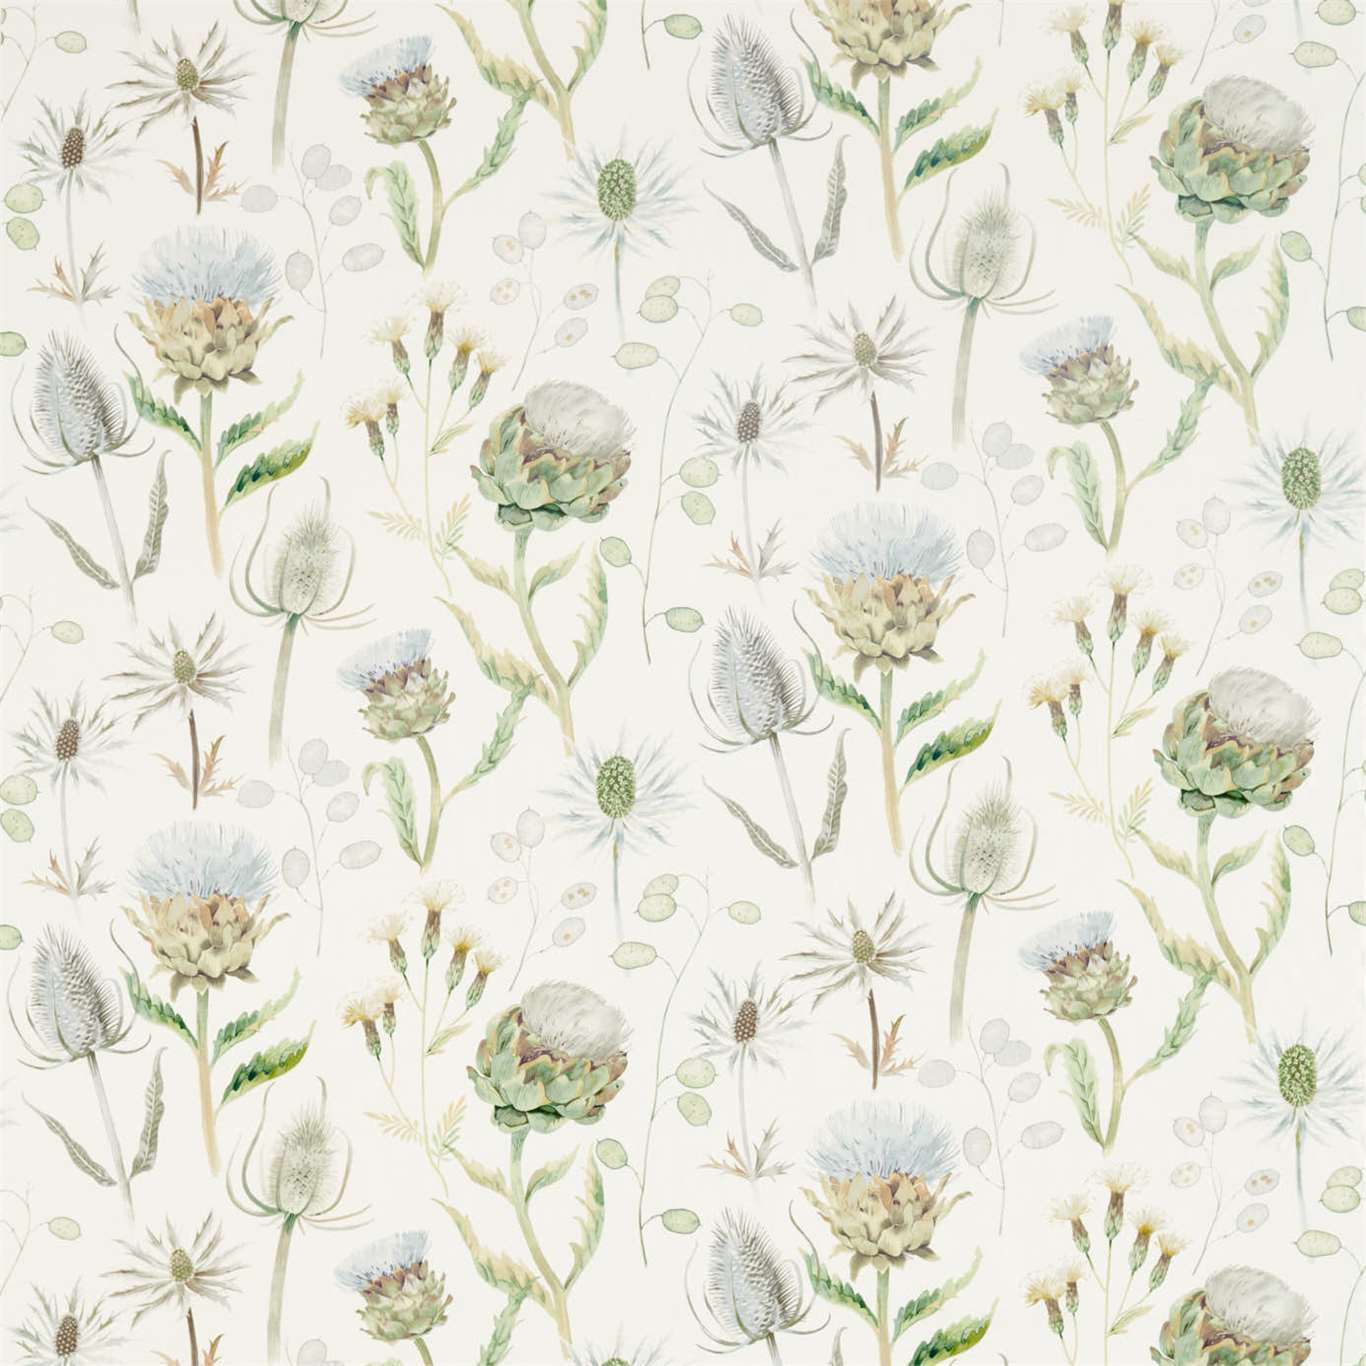 Thistle Garden Fabric by Sanderson